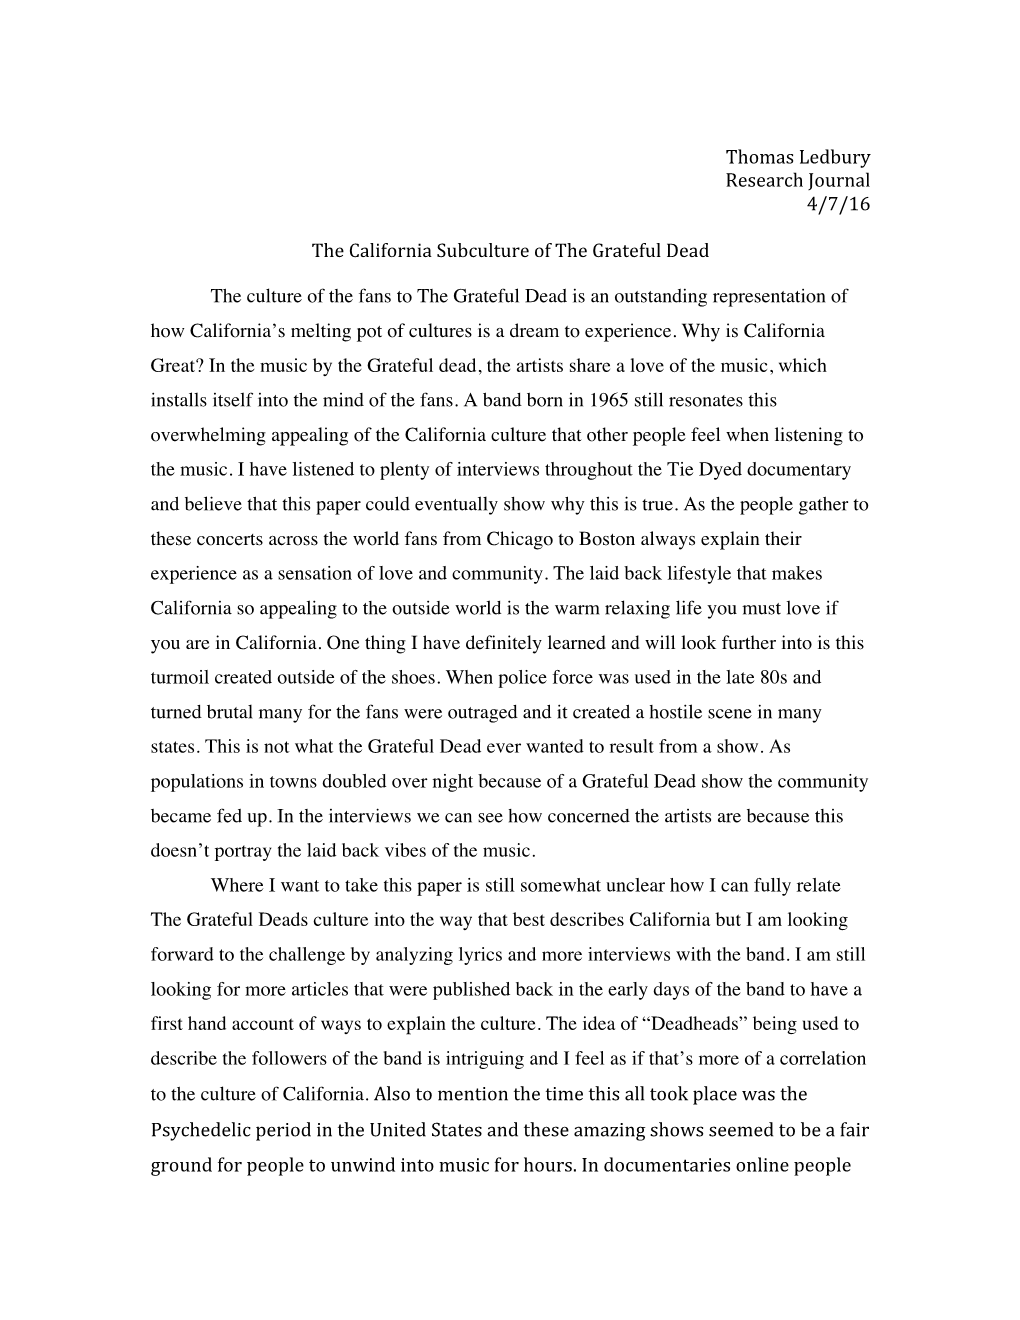 Thomas Ledbury Research Journal 4/7/16 the California Subculture